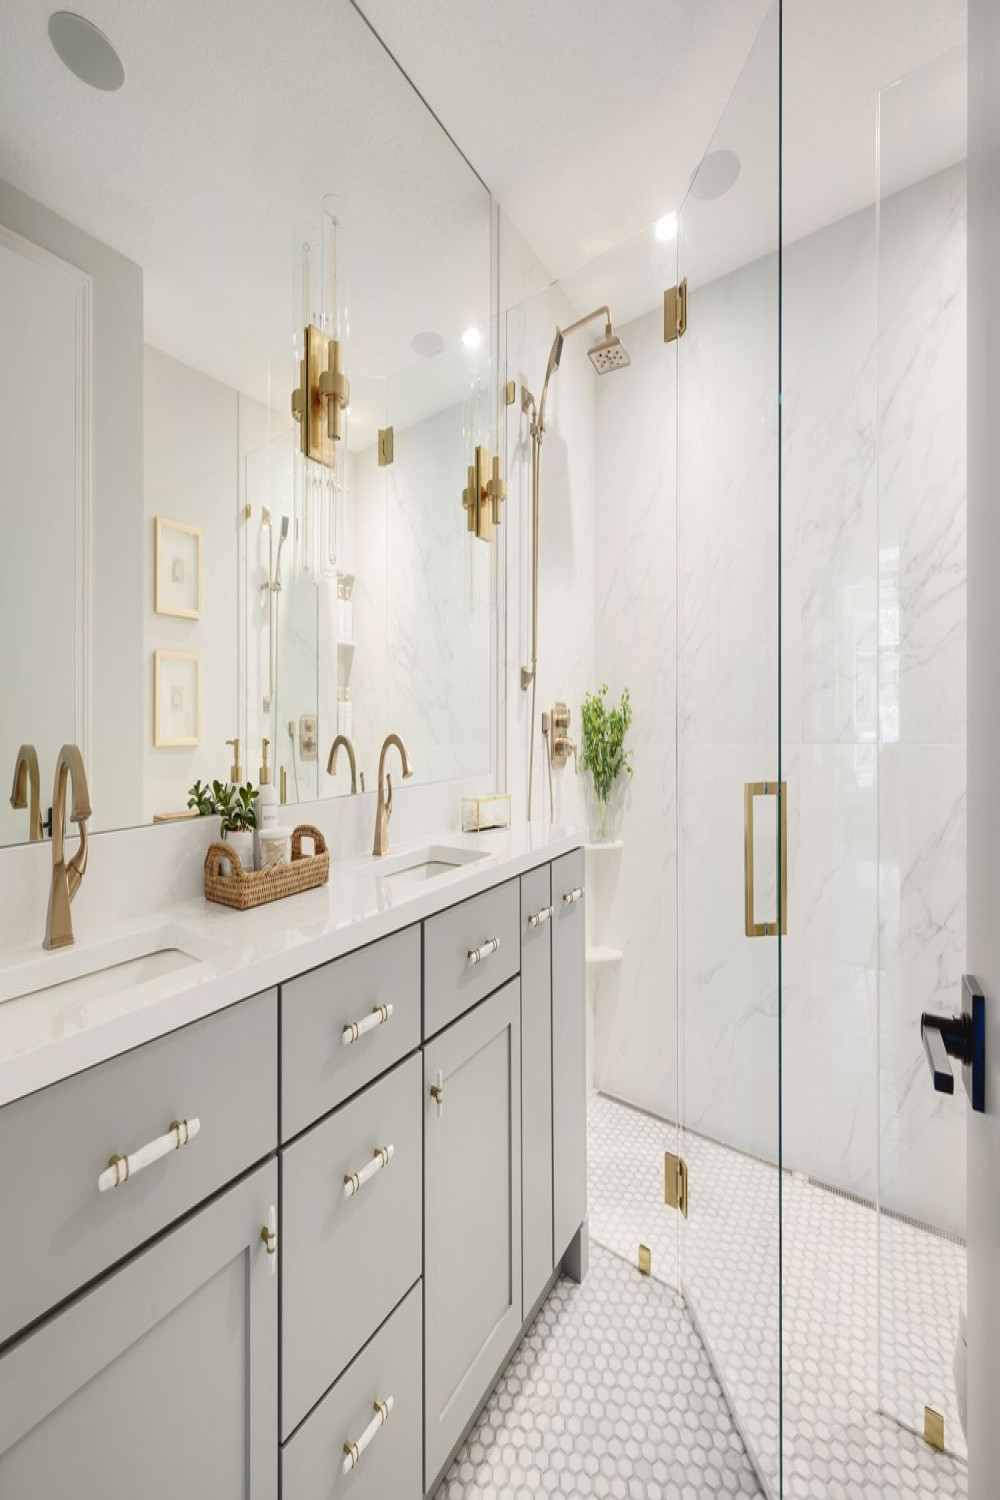 Double Vanity Bathroom Ideas We Love